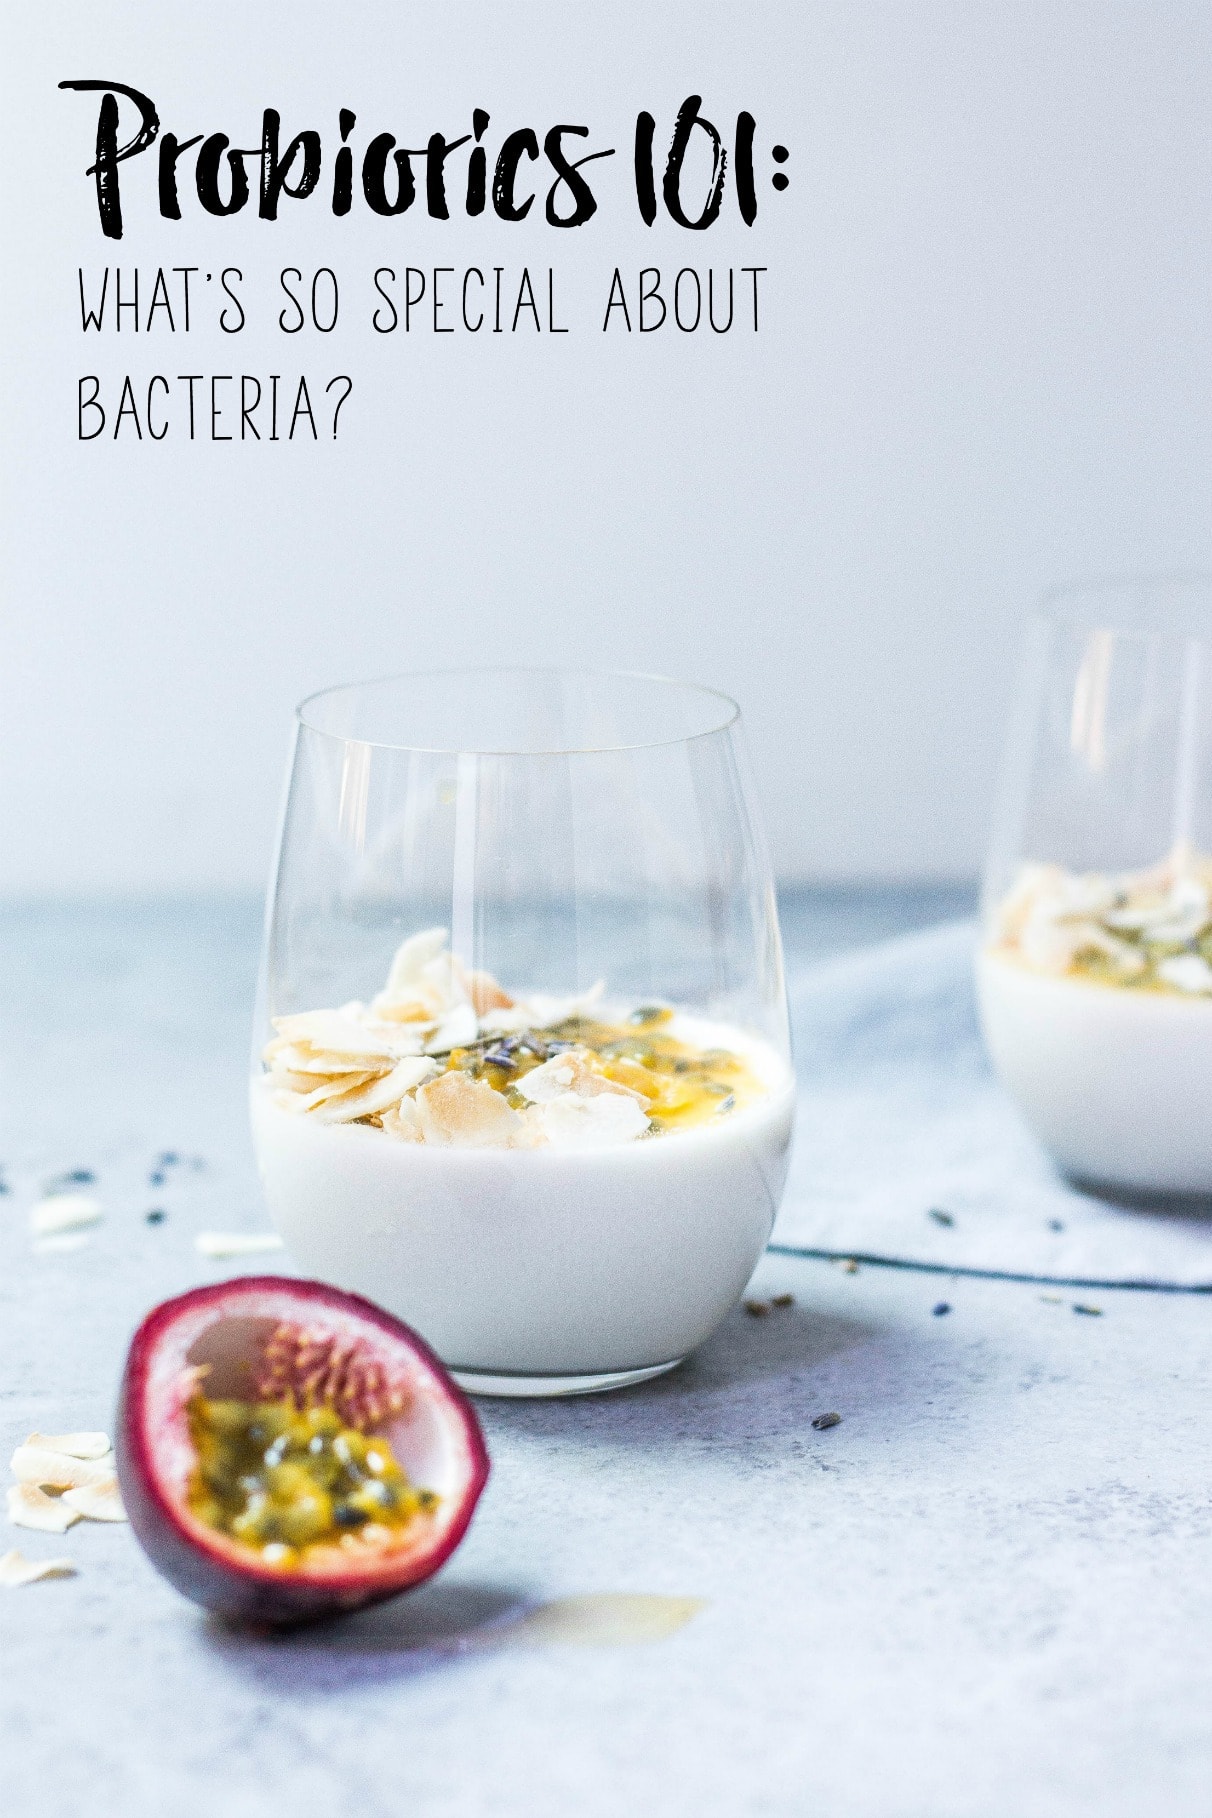 glasses of yogurt with text overlay "probiotics 101"